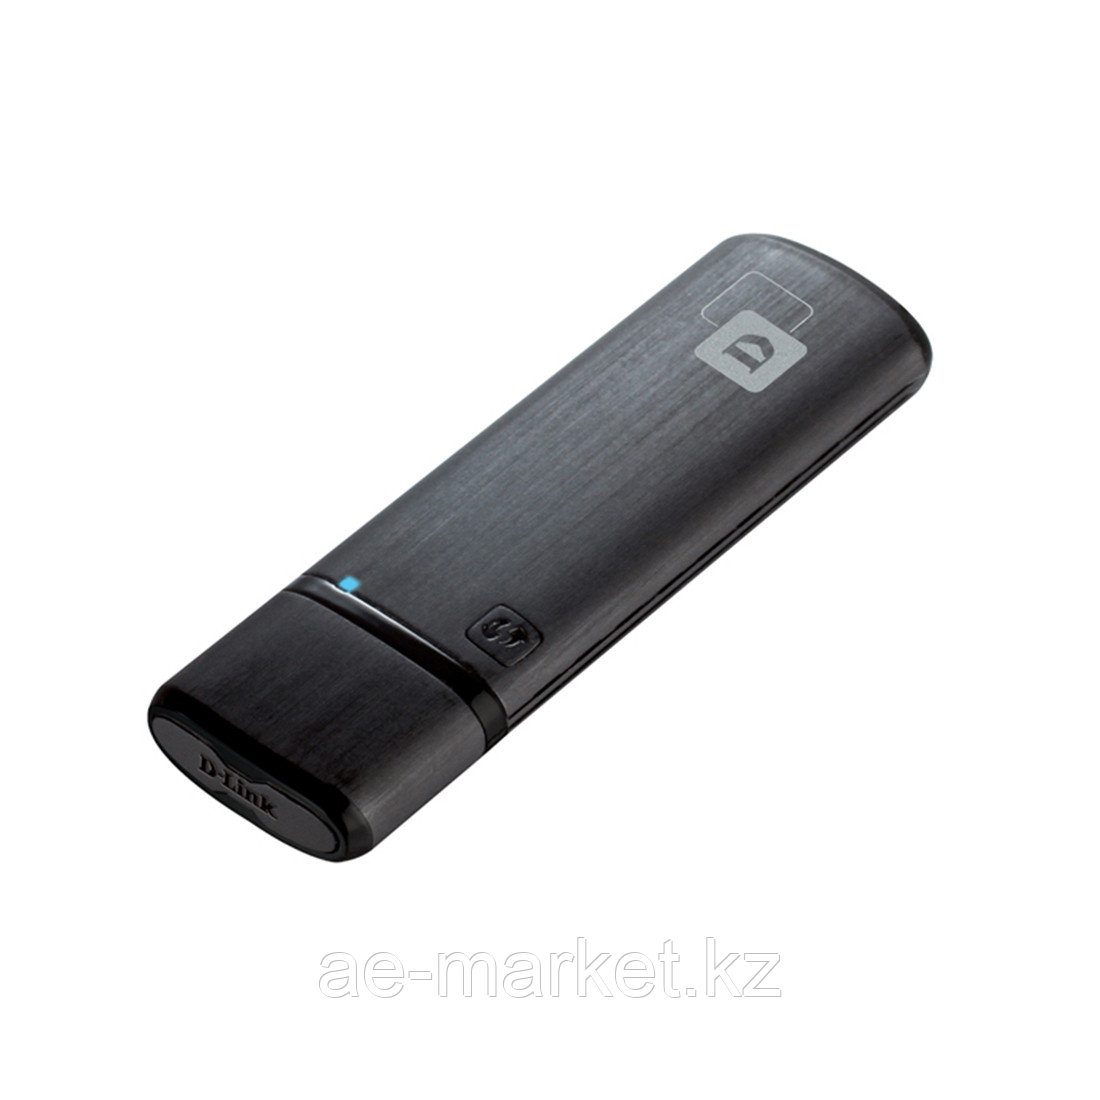 USB адаптер D-Link DWA-182/RU/E1A, фото 1